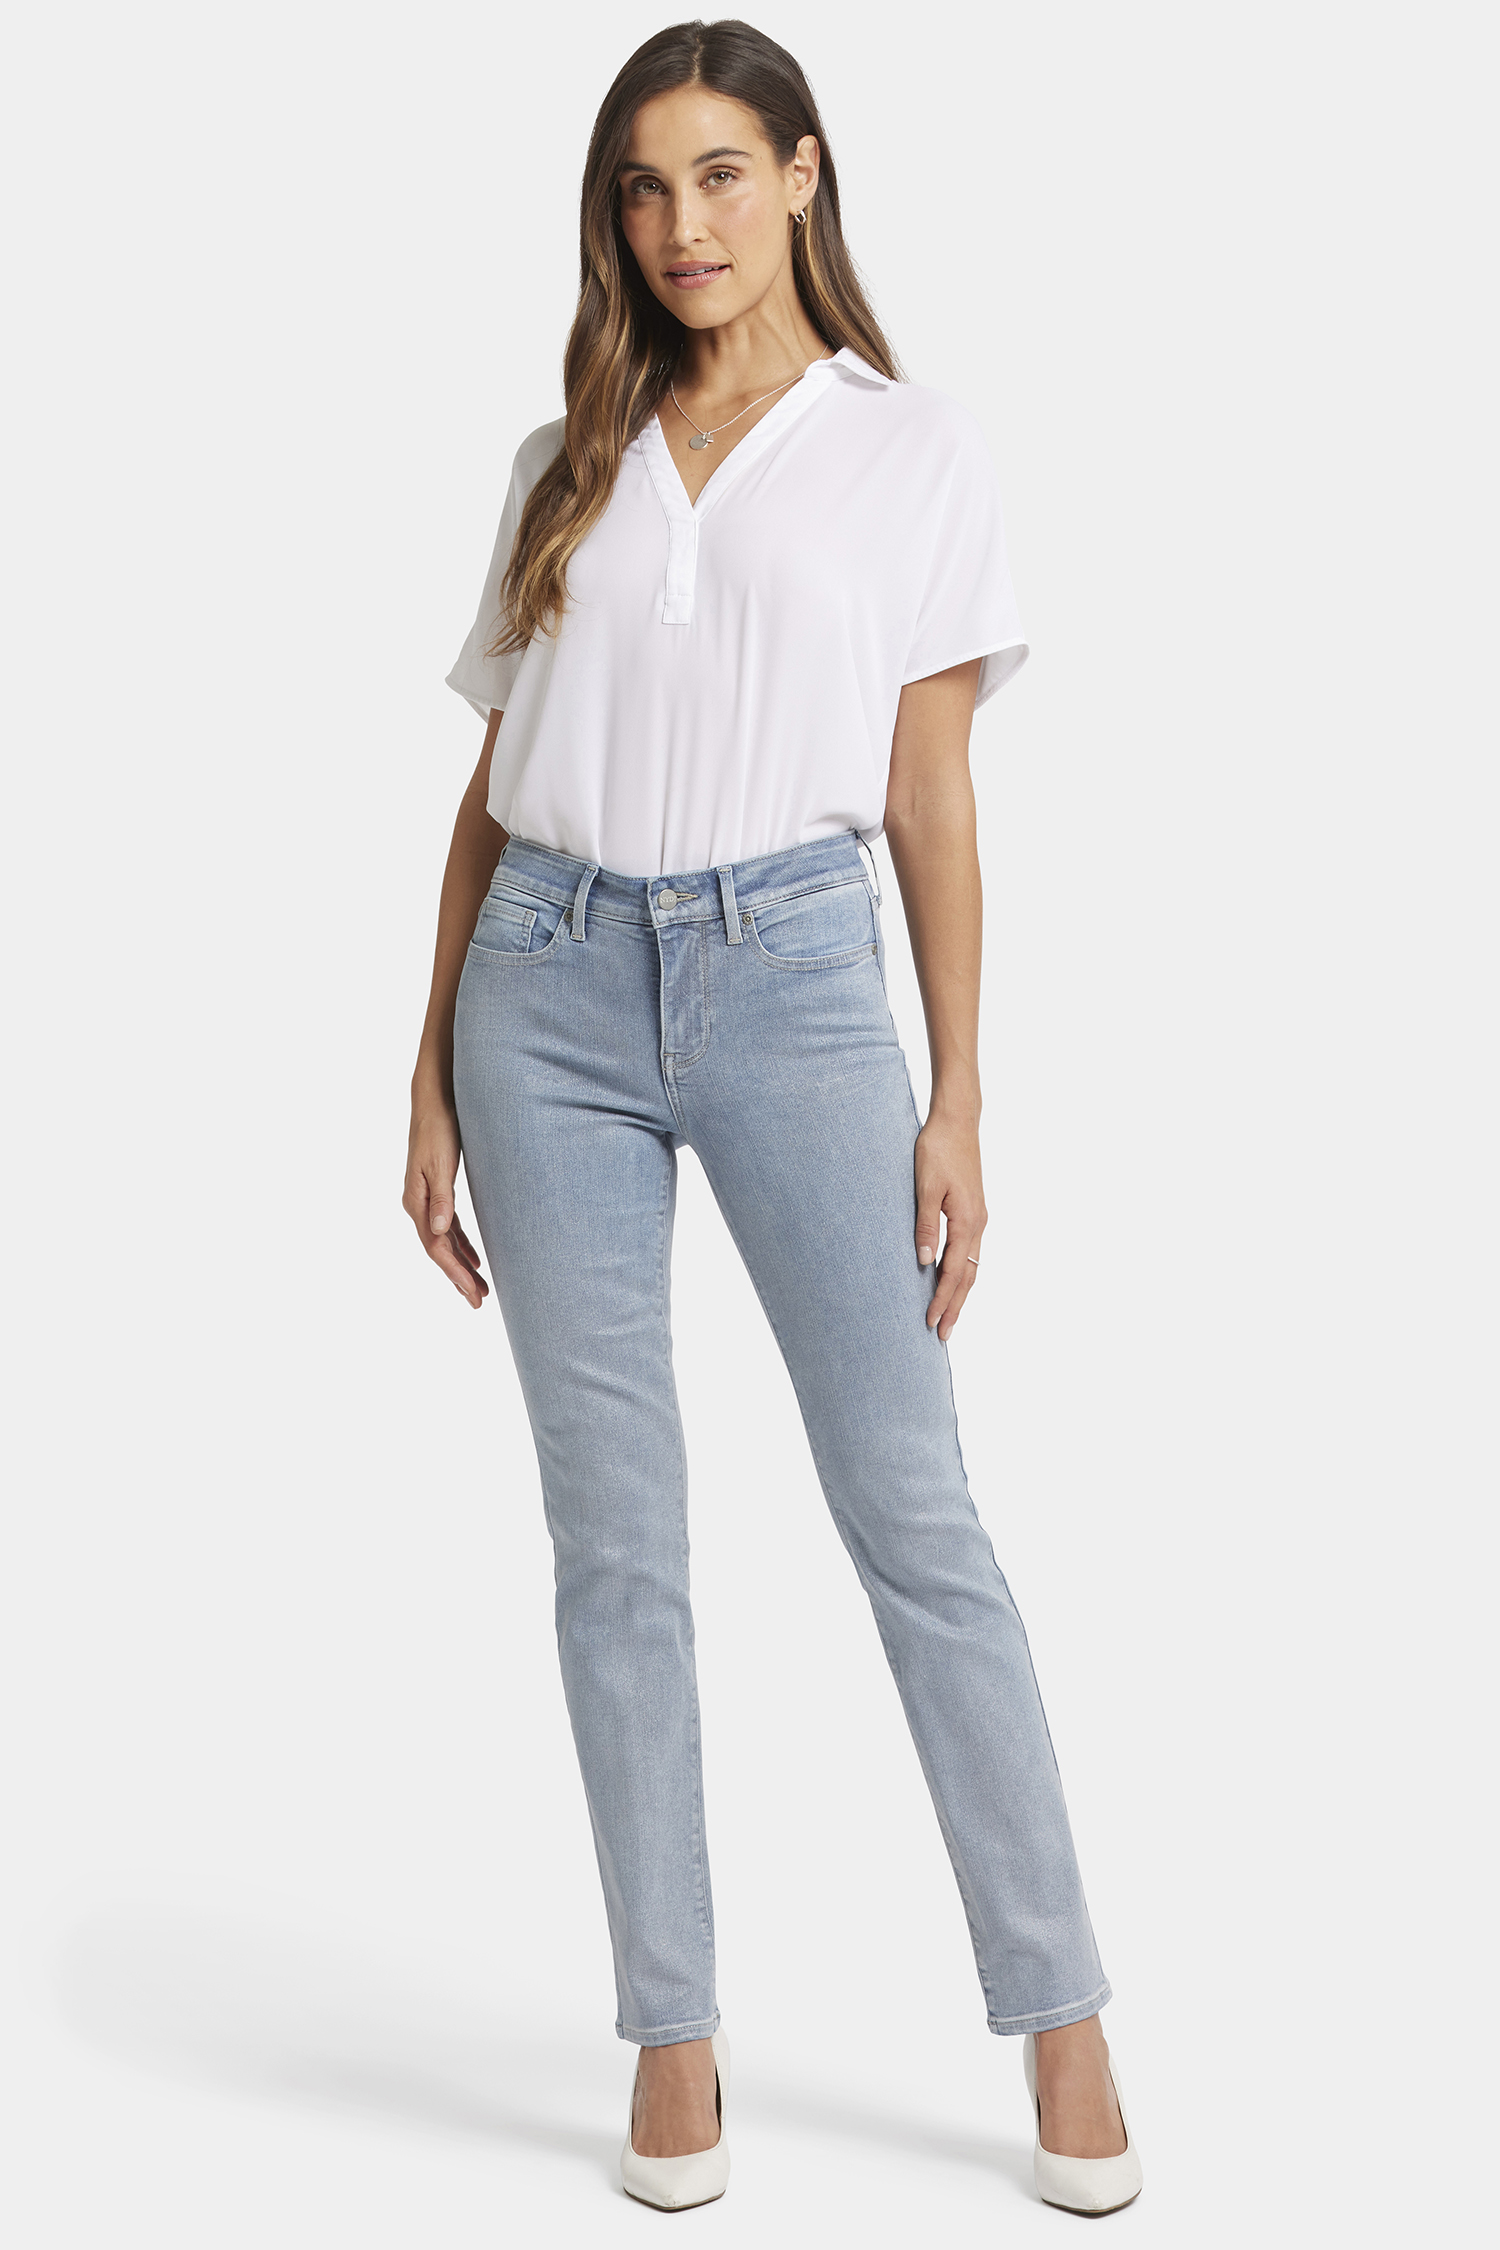 Women's Skinny Jeans - Capri, Ankle & High Rise Skinny